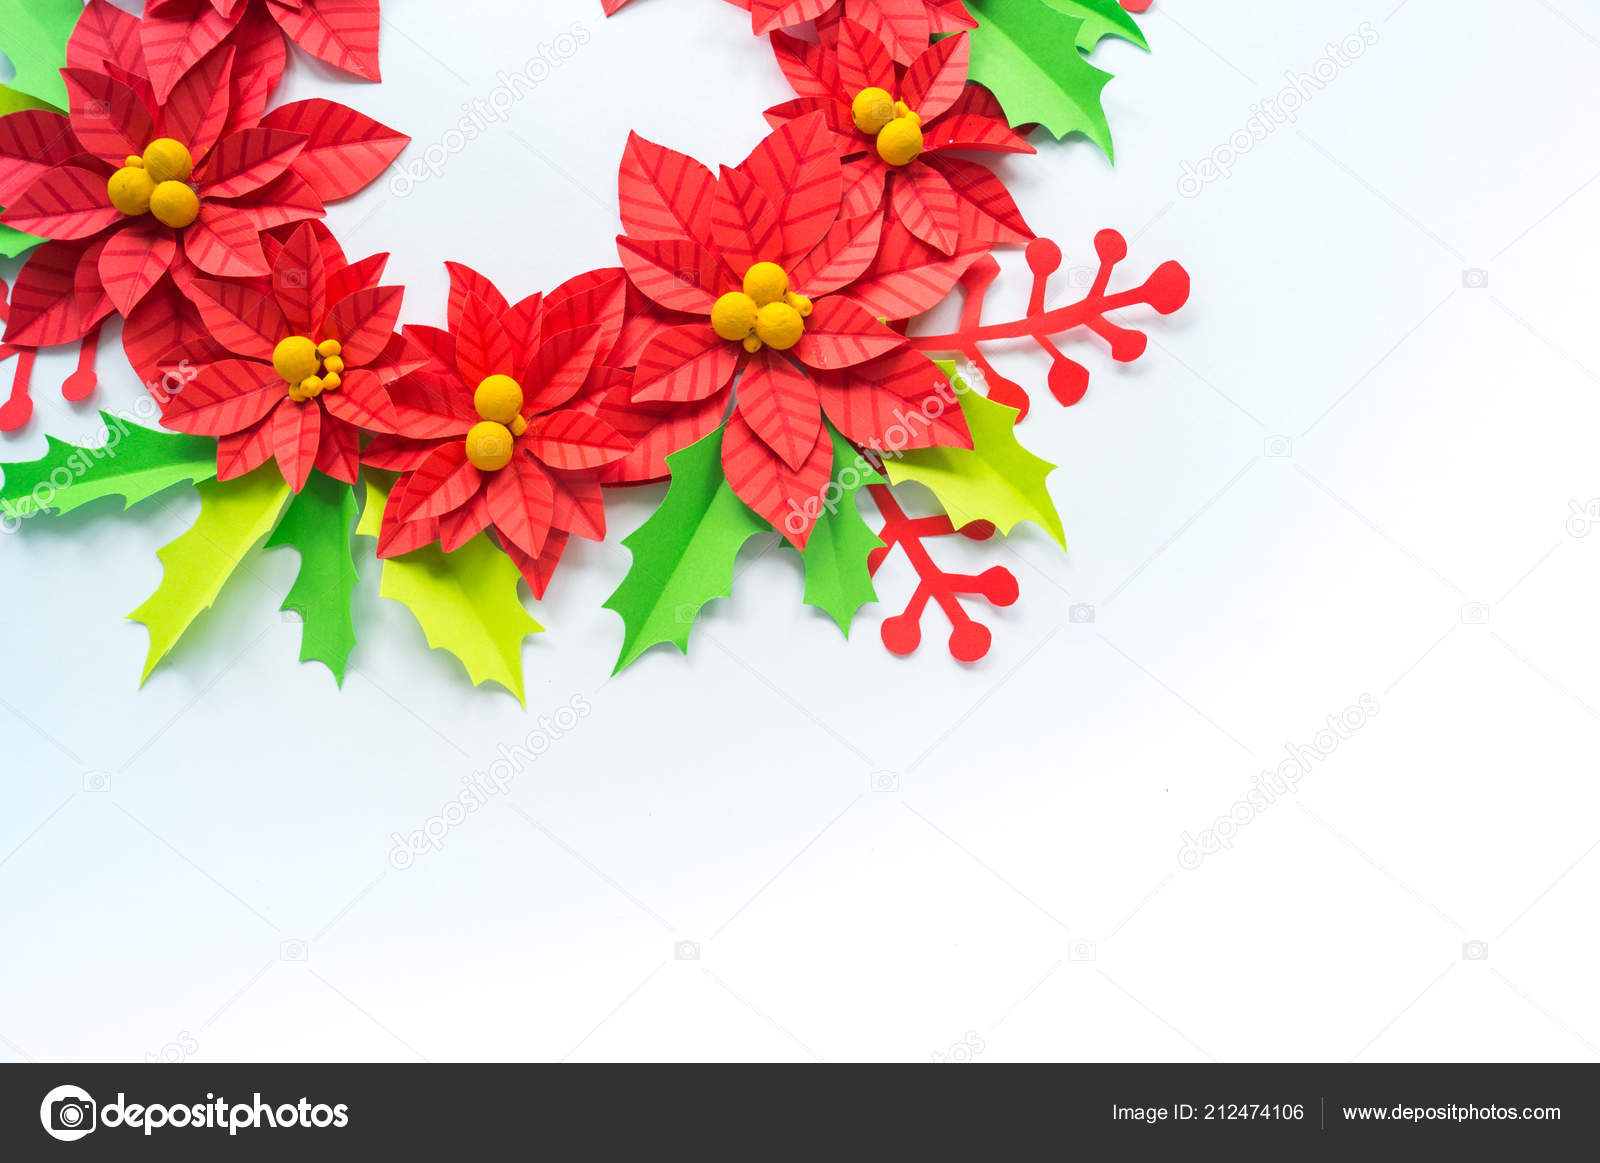 Origami Christmas Flower Poinsettia Paper Flower Poinsettia Leaves Holly Christmas Wreath White